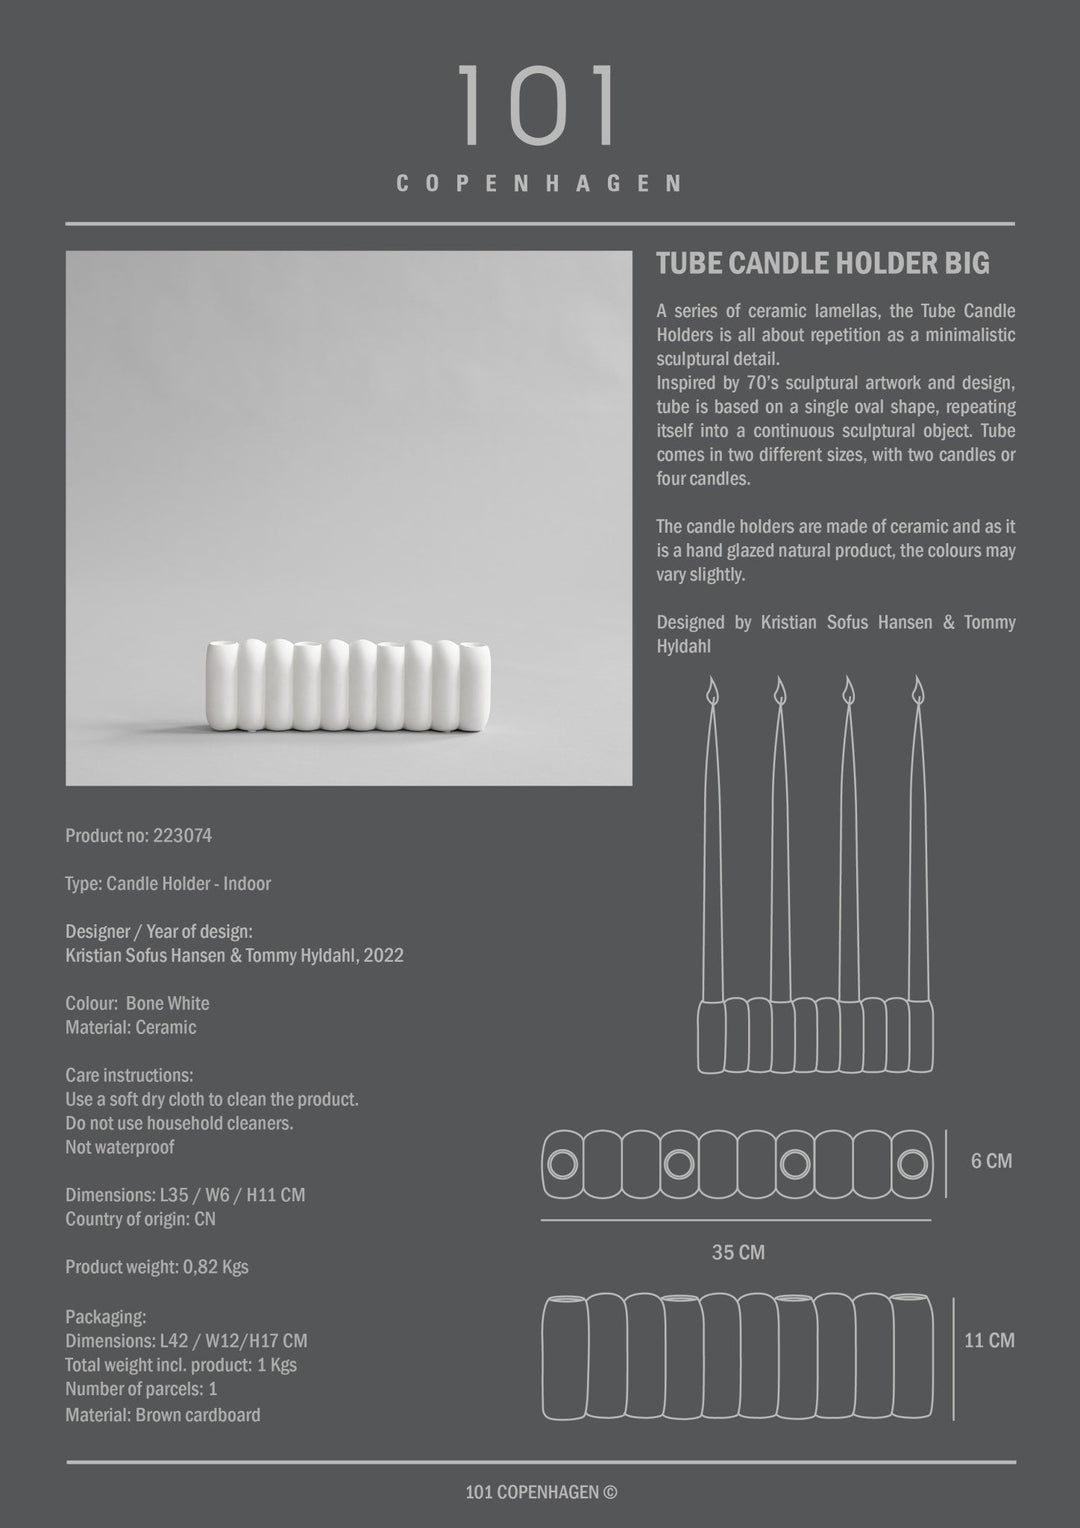 101 Copenhagen Tube Candle Holder - $55.00 - $115.00